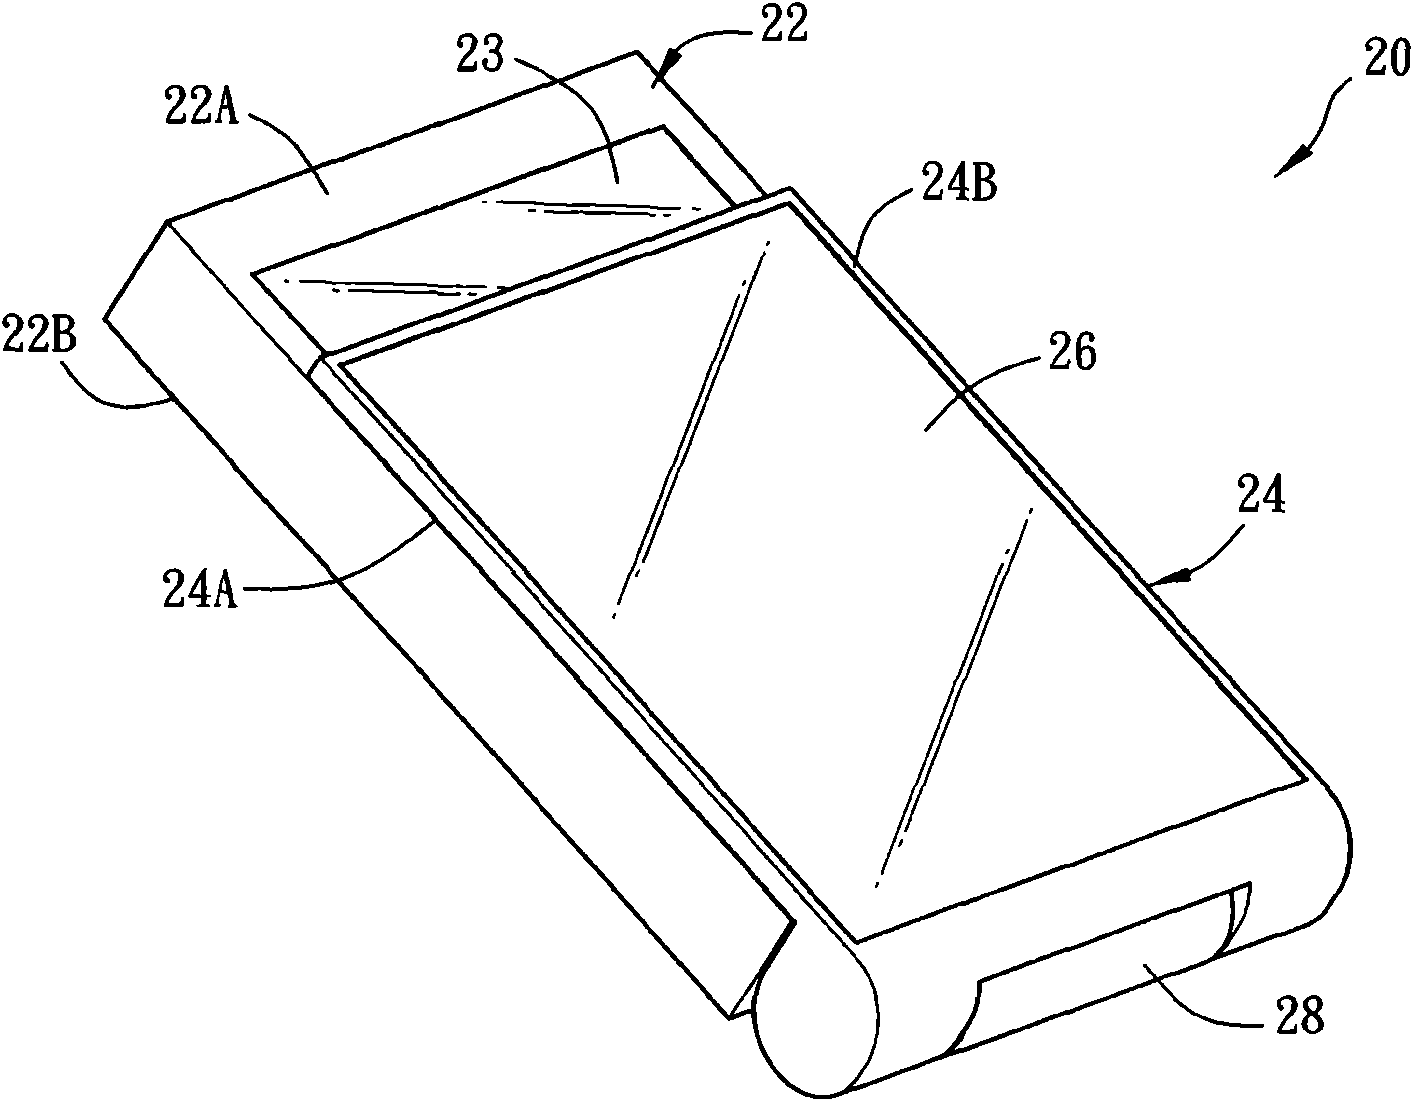 Folding mobile device